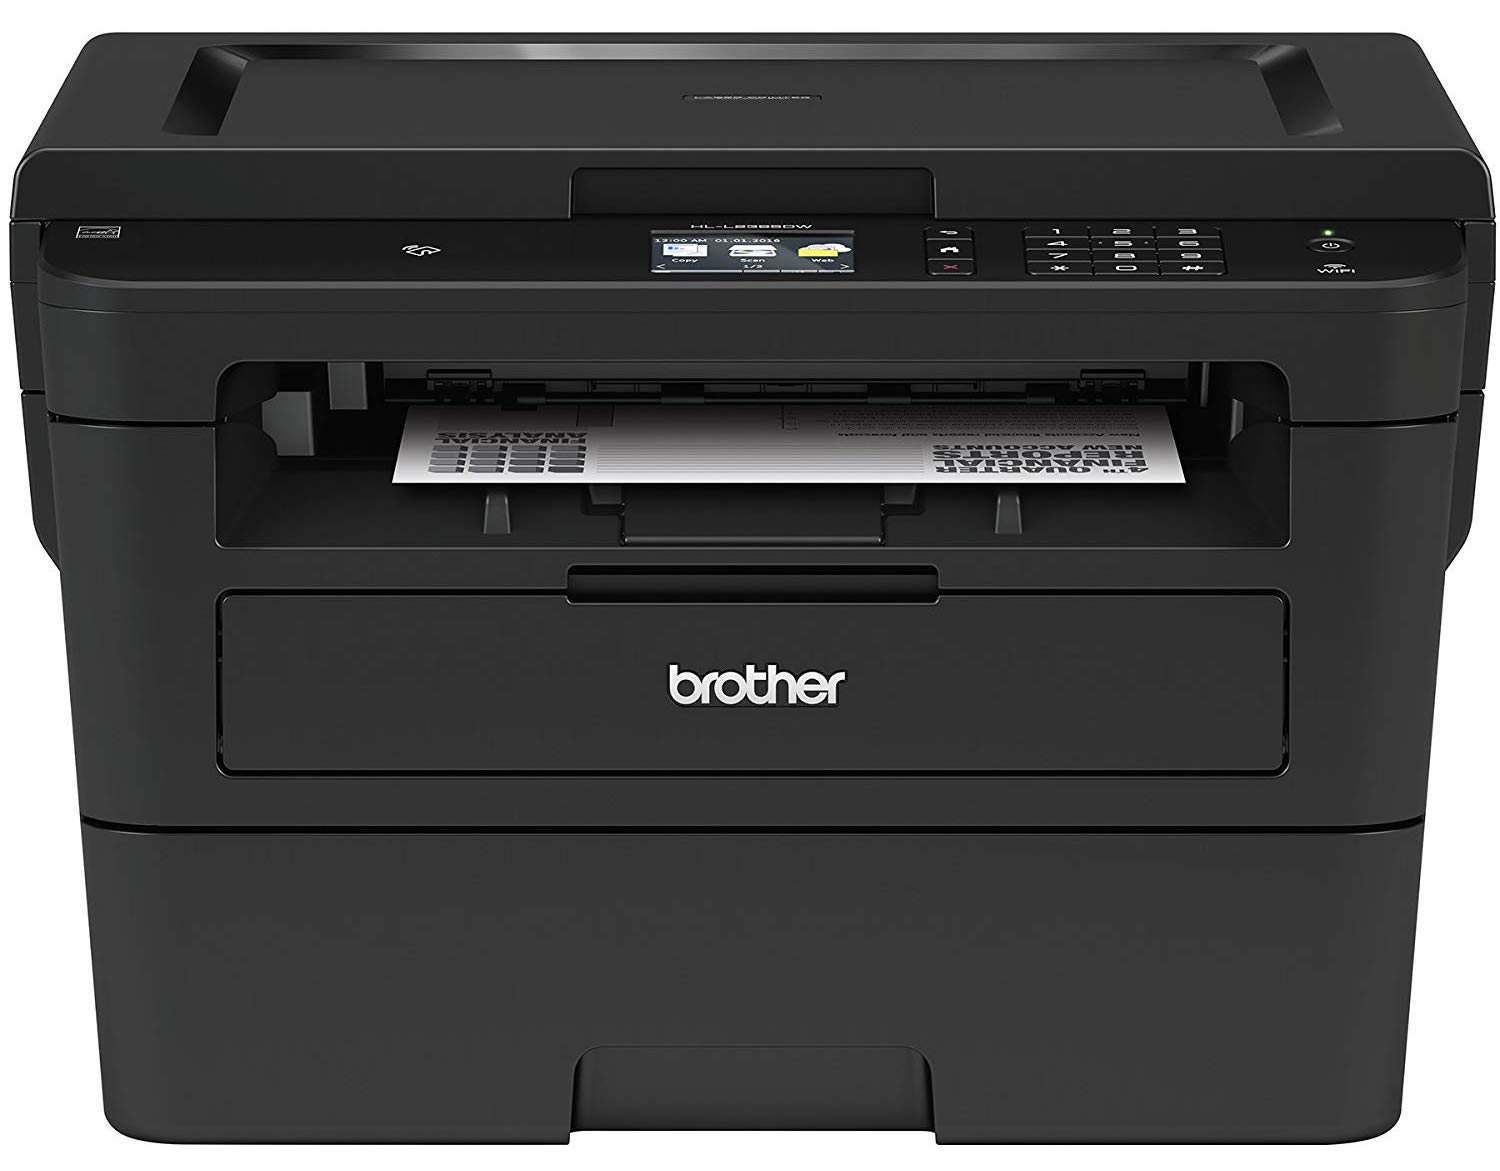 Brother Compact Printer